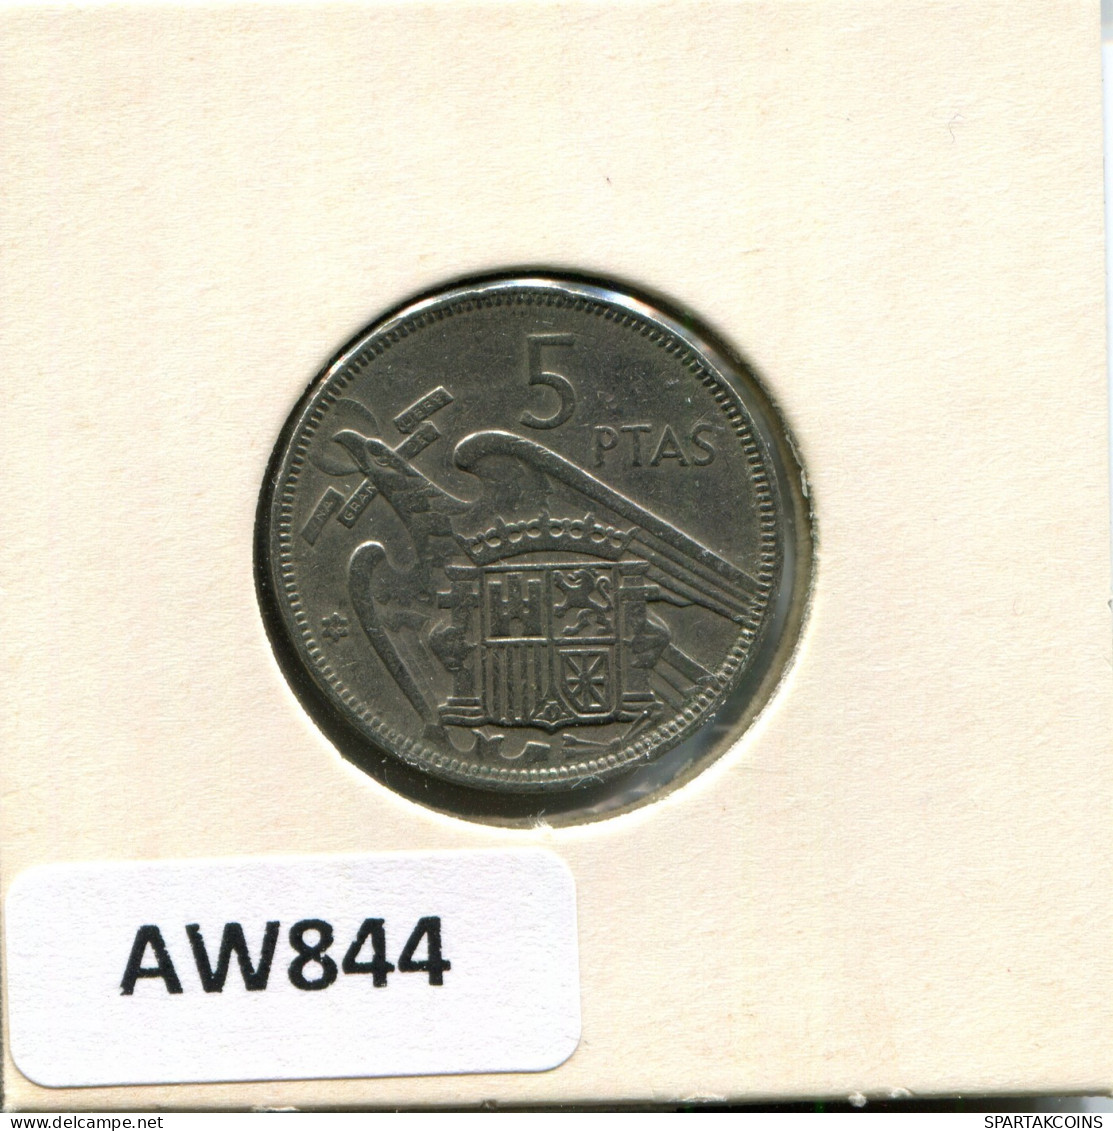 5 PESETAS 1957 SPAIN Coin #AW844.U.A - 5 Pesetas